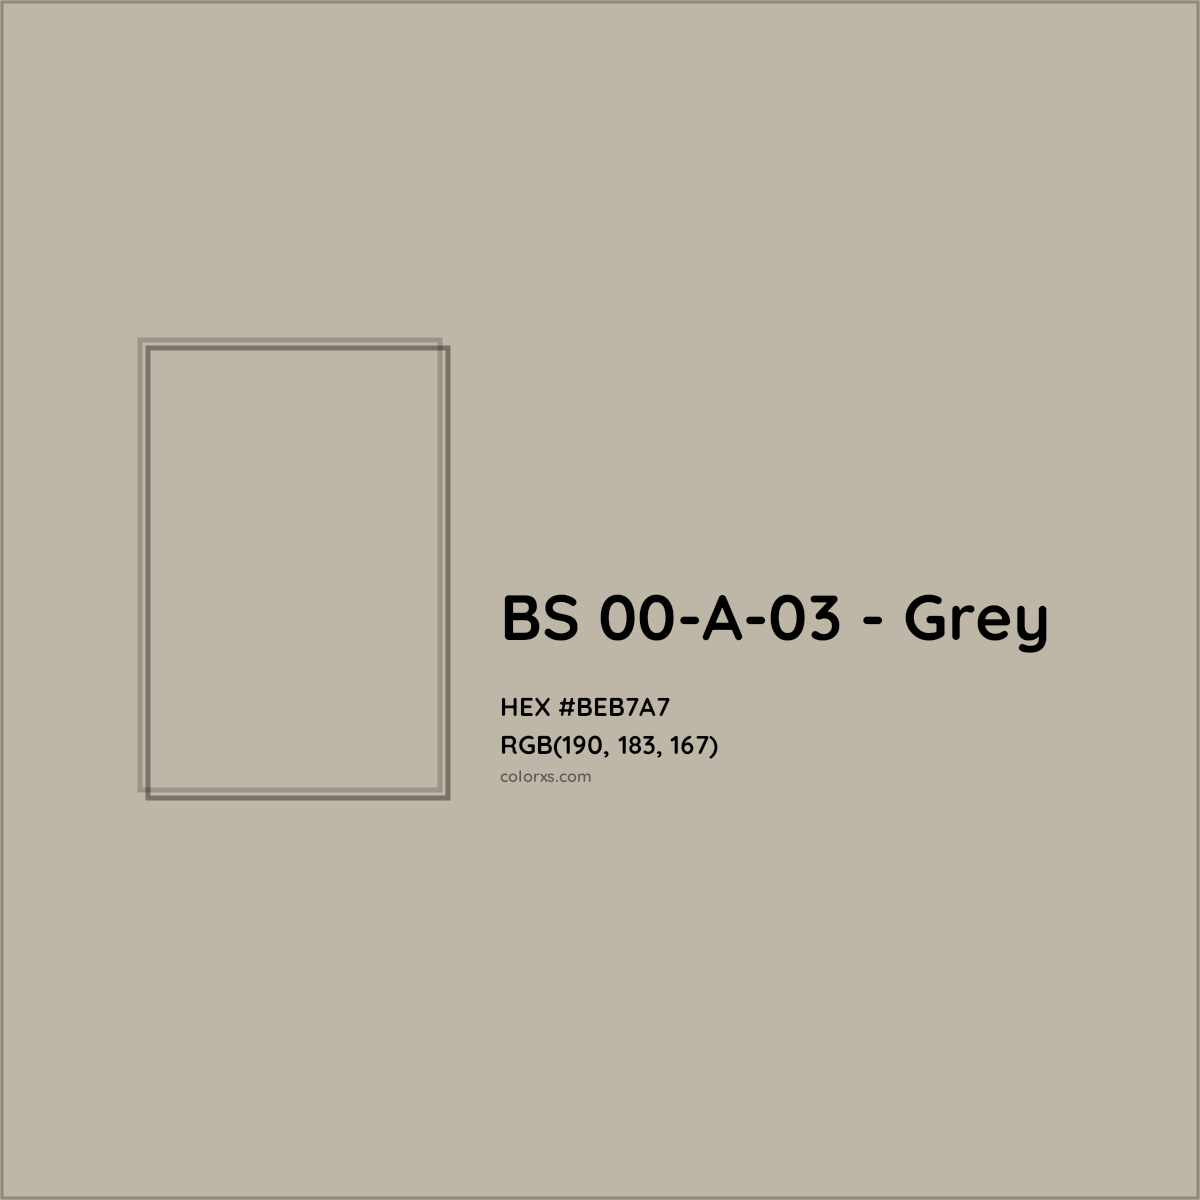 HEX #BEB7A7 BS 00-A-03 - Grey CMS British Standard 4800 - Color Code